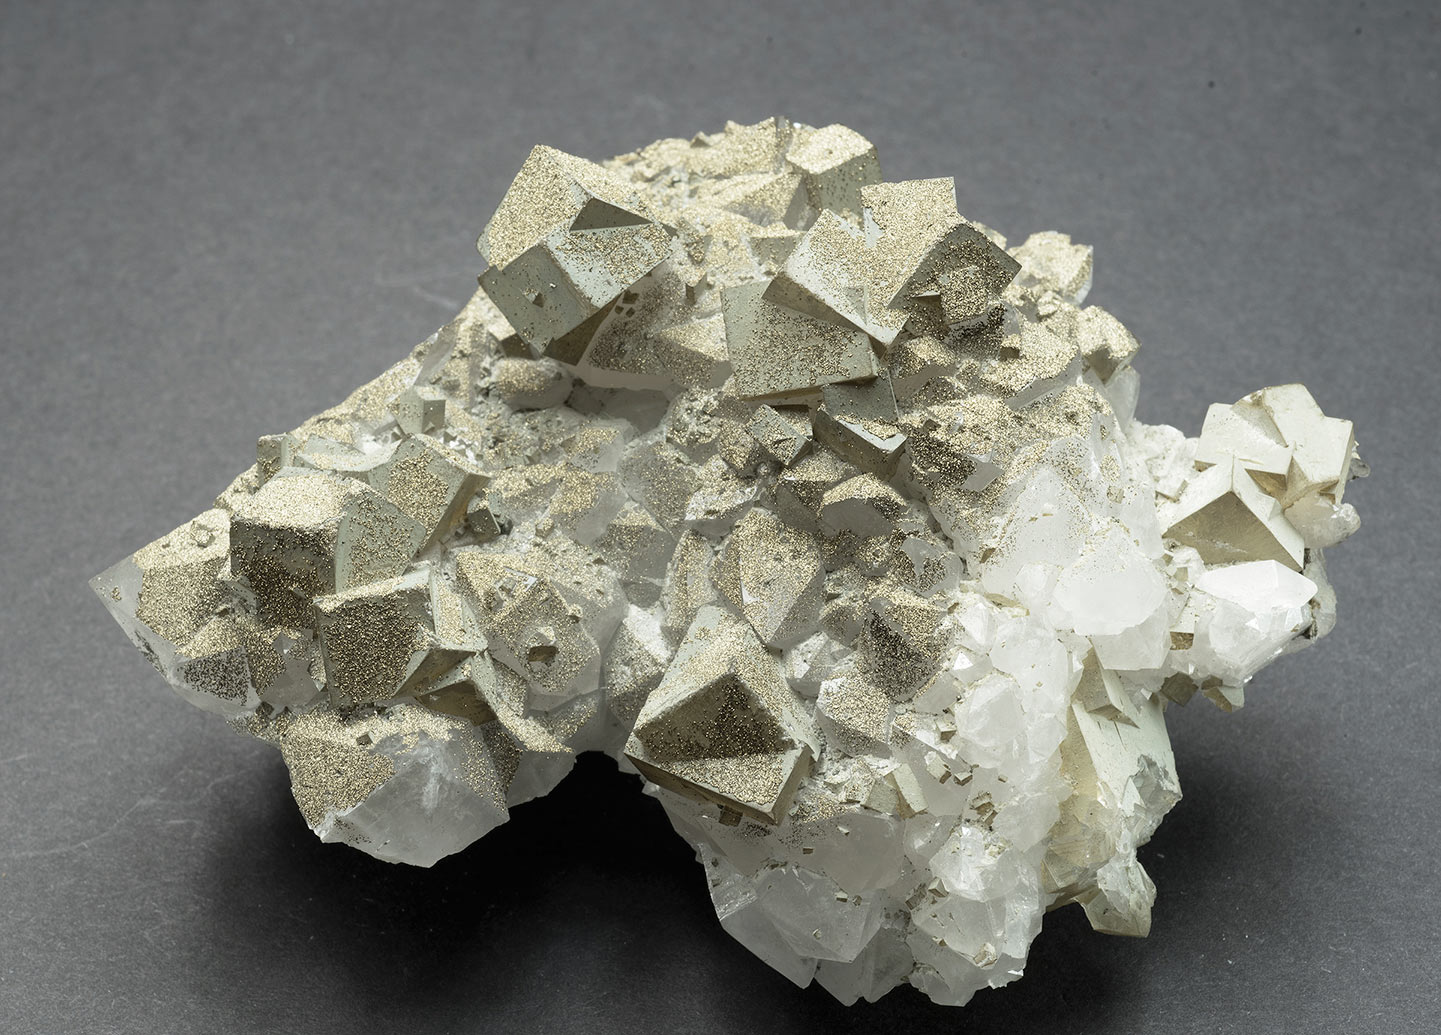 Pyrite & chamosite on fluorite, 'Zinc flats', Cambokeels mine, Eastgate, Weardale. 110x90x45mm